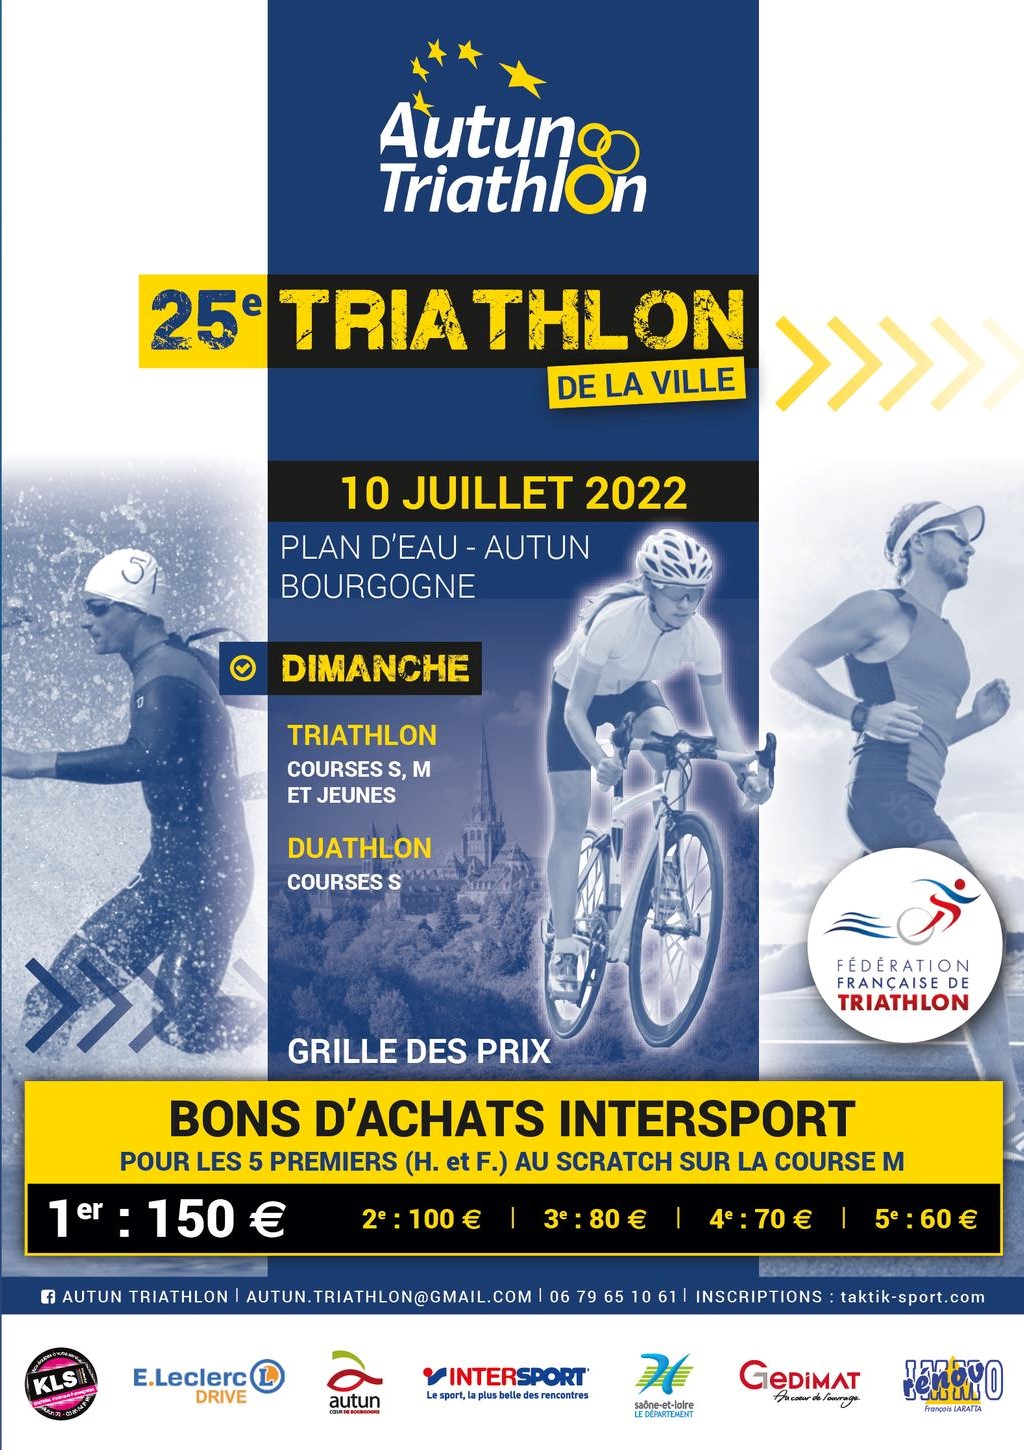 alt triathlon autun 2022 10 juillet programme